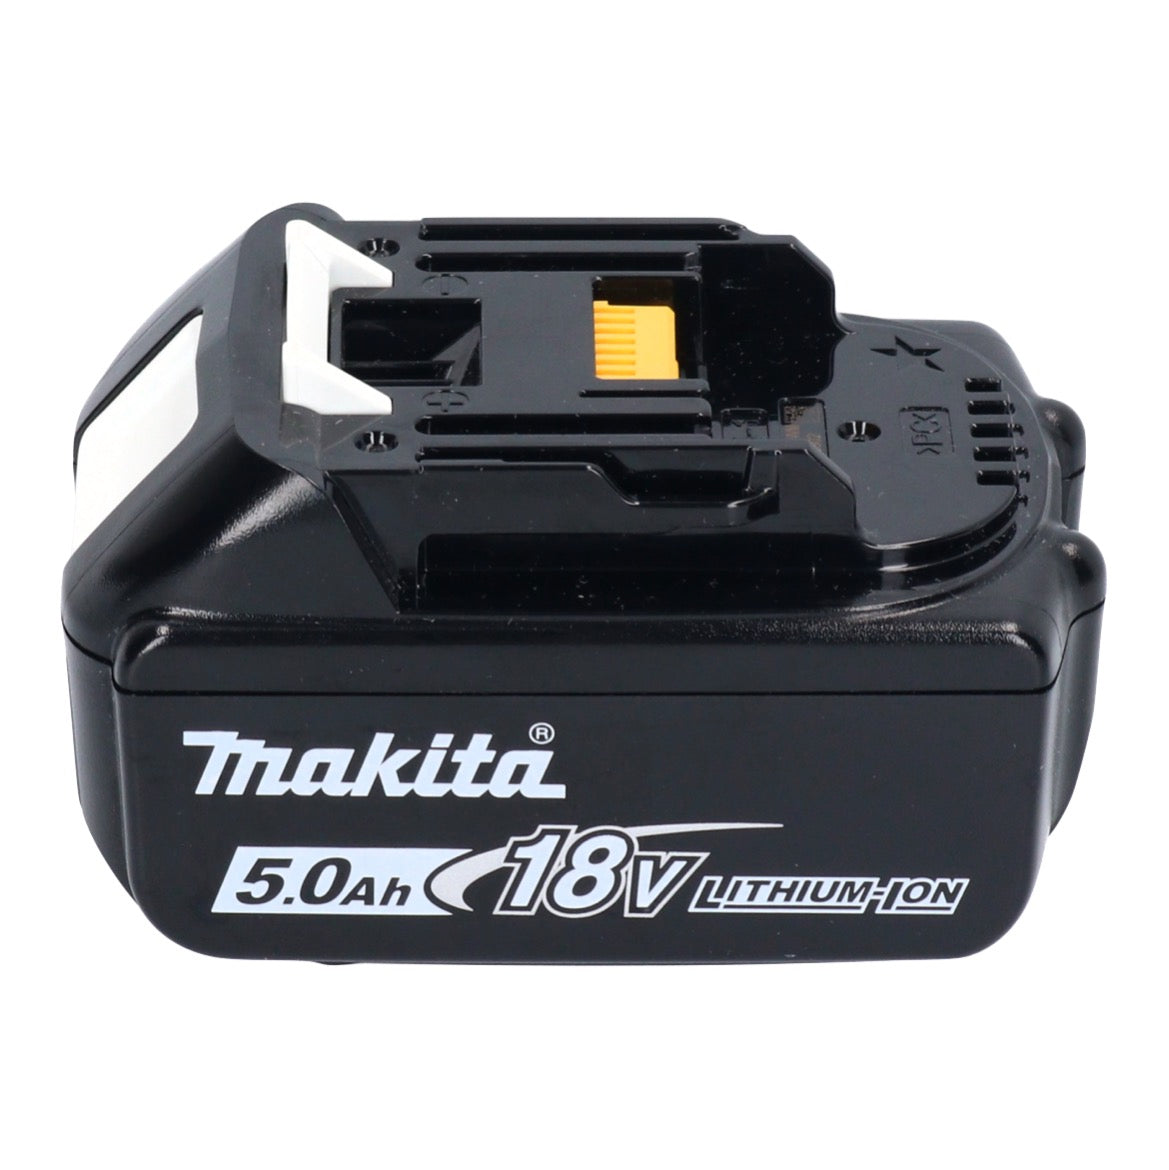 Makita DTD 157 T1 Akku Schlagschrauber 18 V 140 Nm 1/4" Brushless + 1x Akku 5,0 Ah - ohne Ladegerät